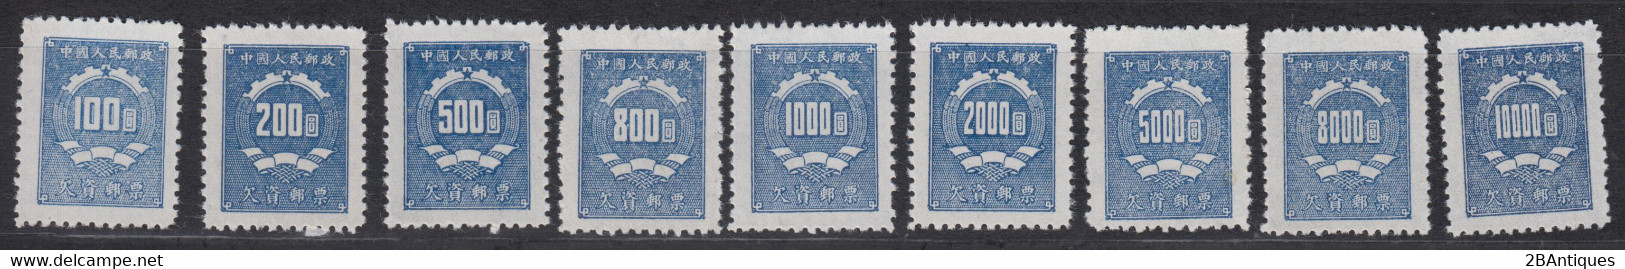 PR China 1950 - Postage Due Stamps COMPLETE SET MNH** XF - Segnatasse